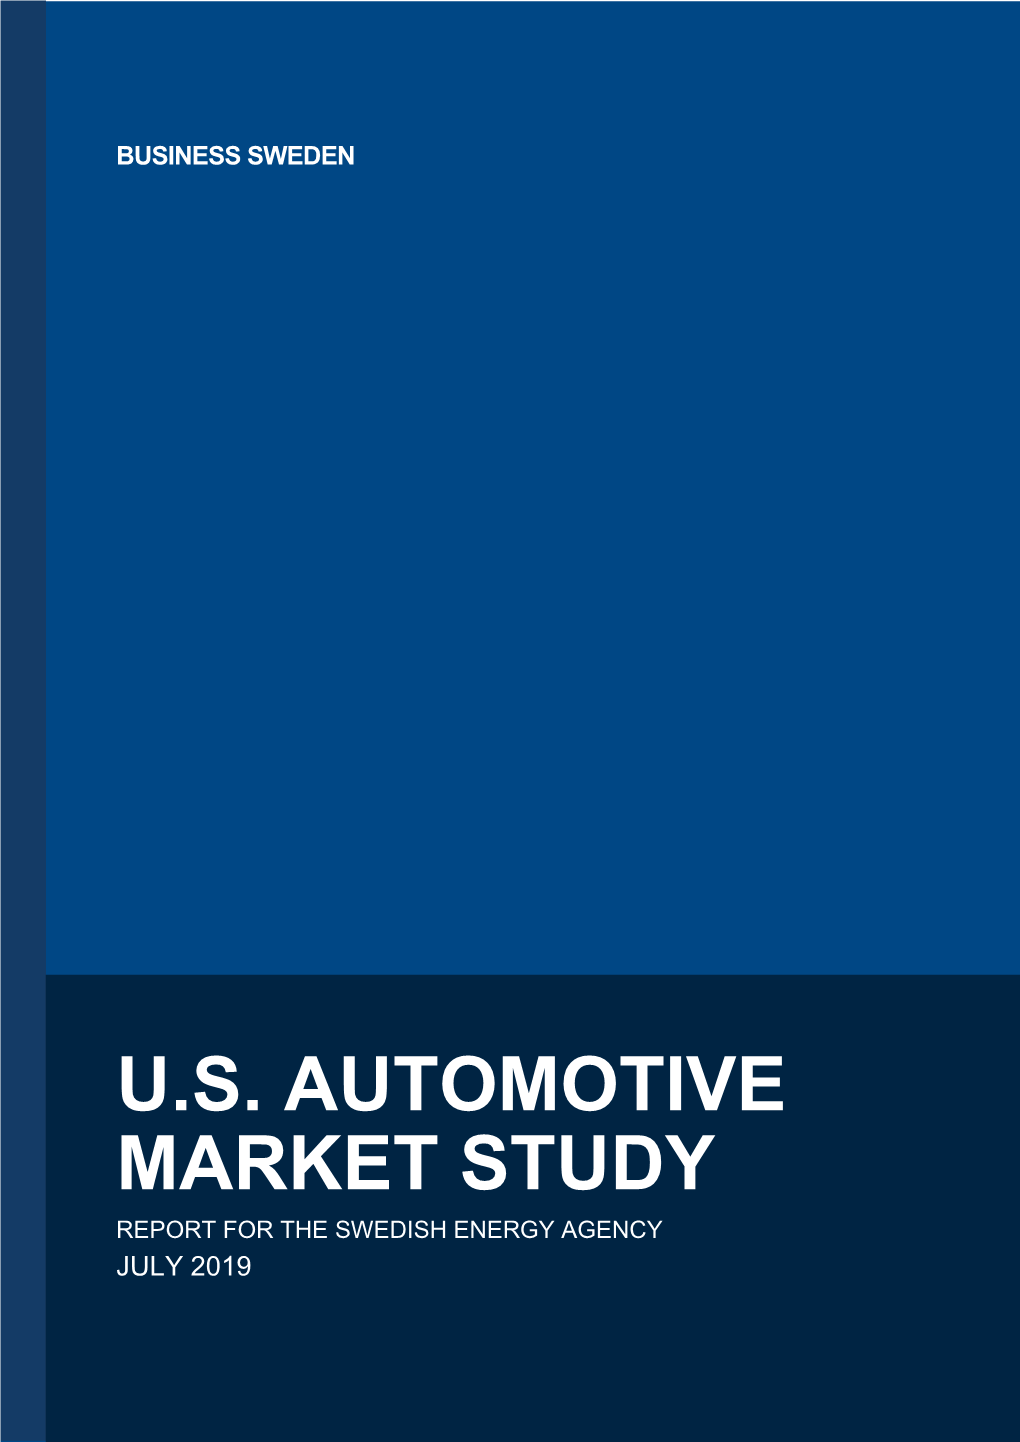 U.S. Automotive Market Study Report for the Swedish Energy Agency July 2019